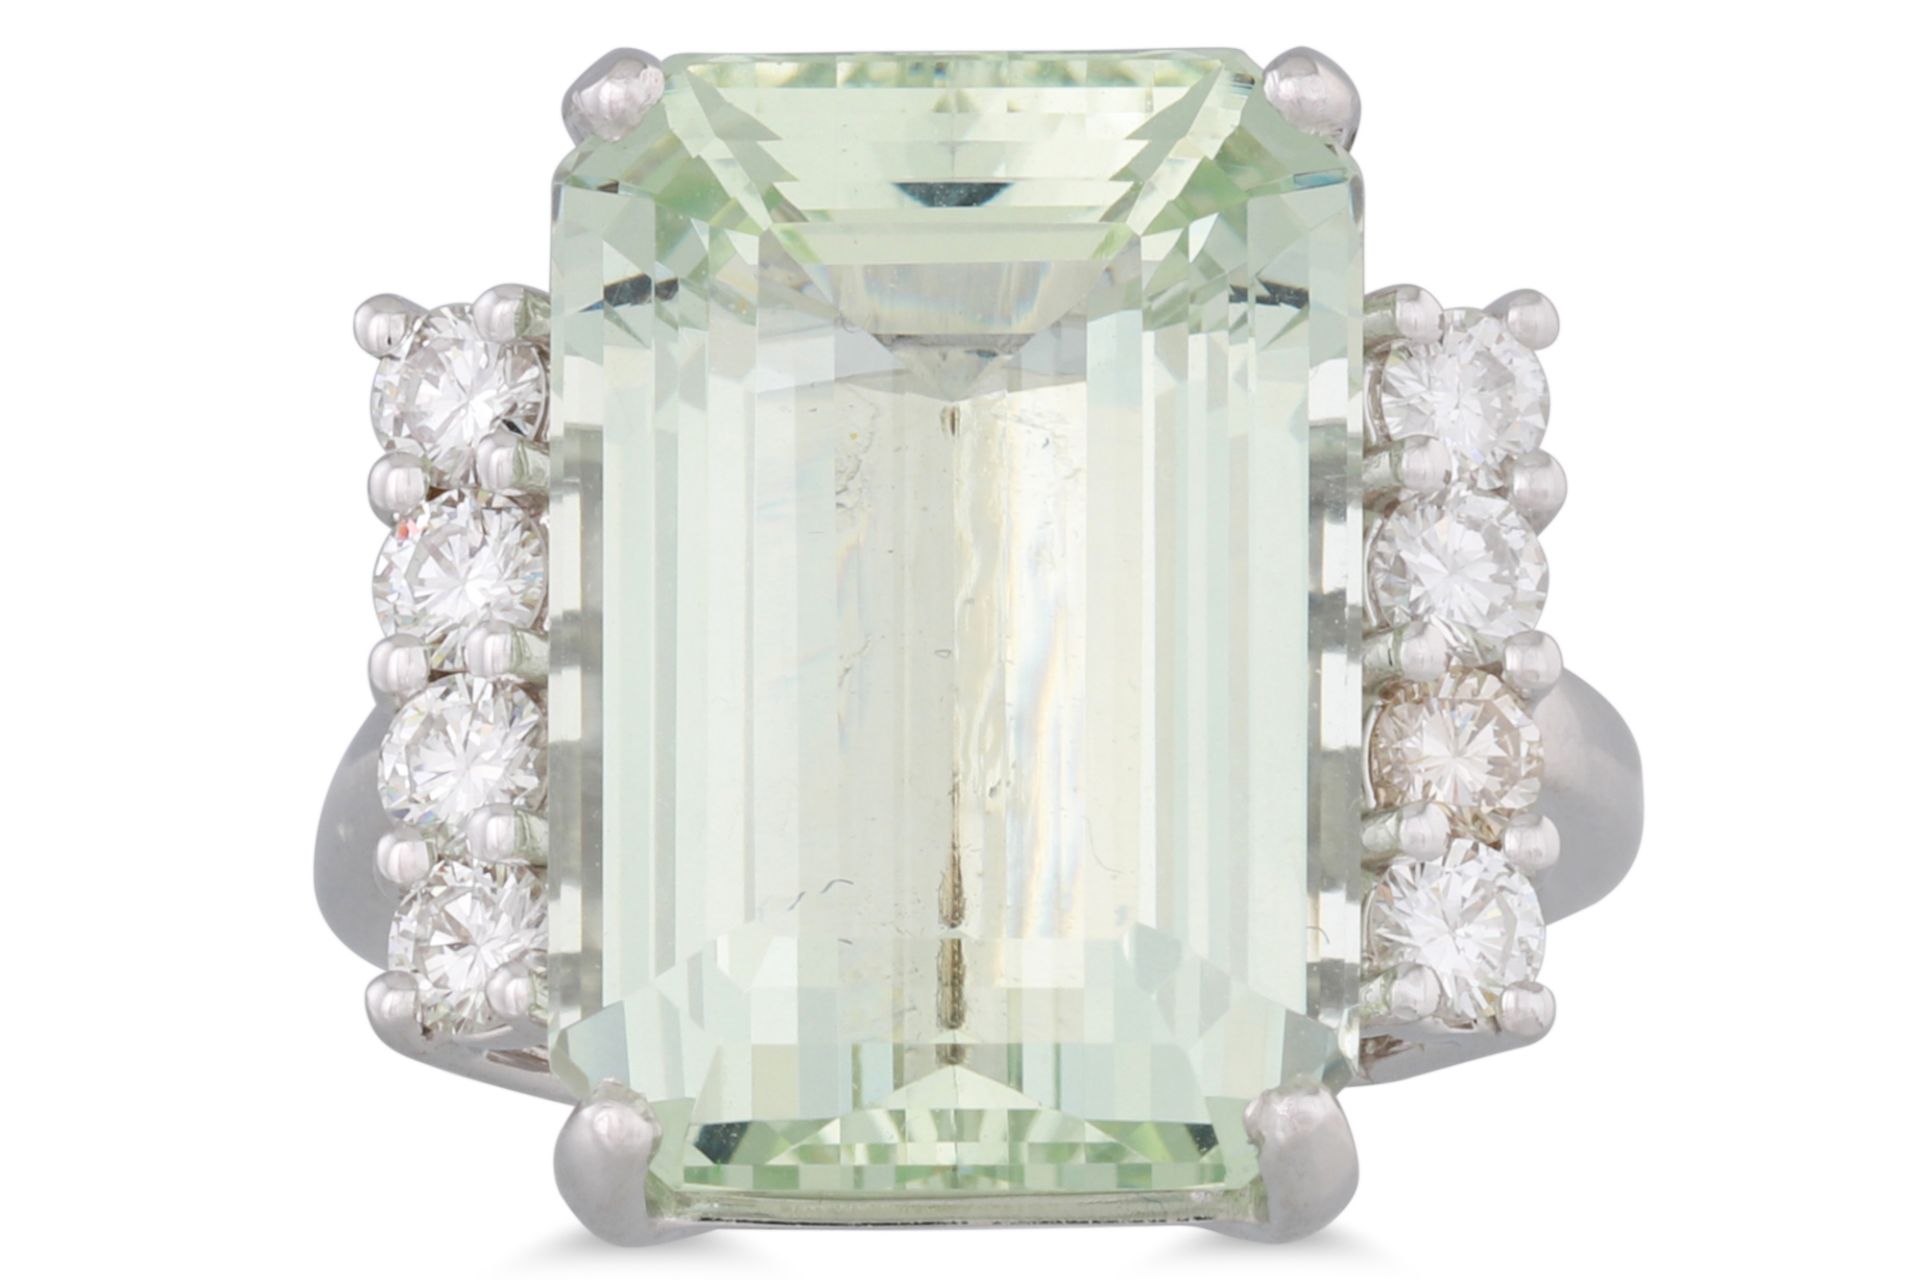 AN AQUAMARINE AND DIAMOND RING, the rectangular aquamarine to diamond shoulders, mounted in 18ct